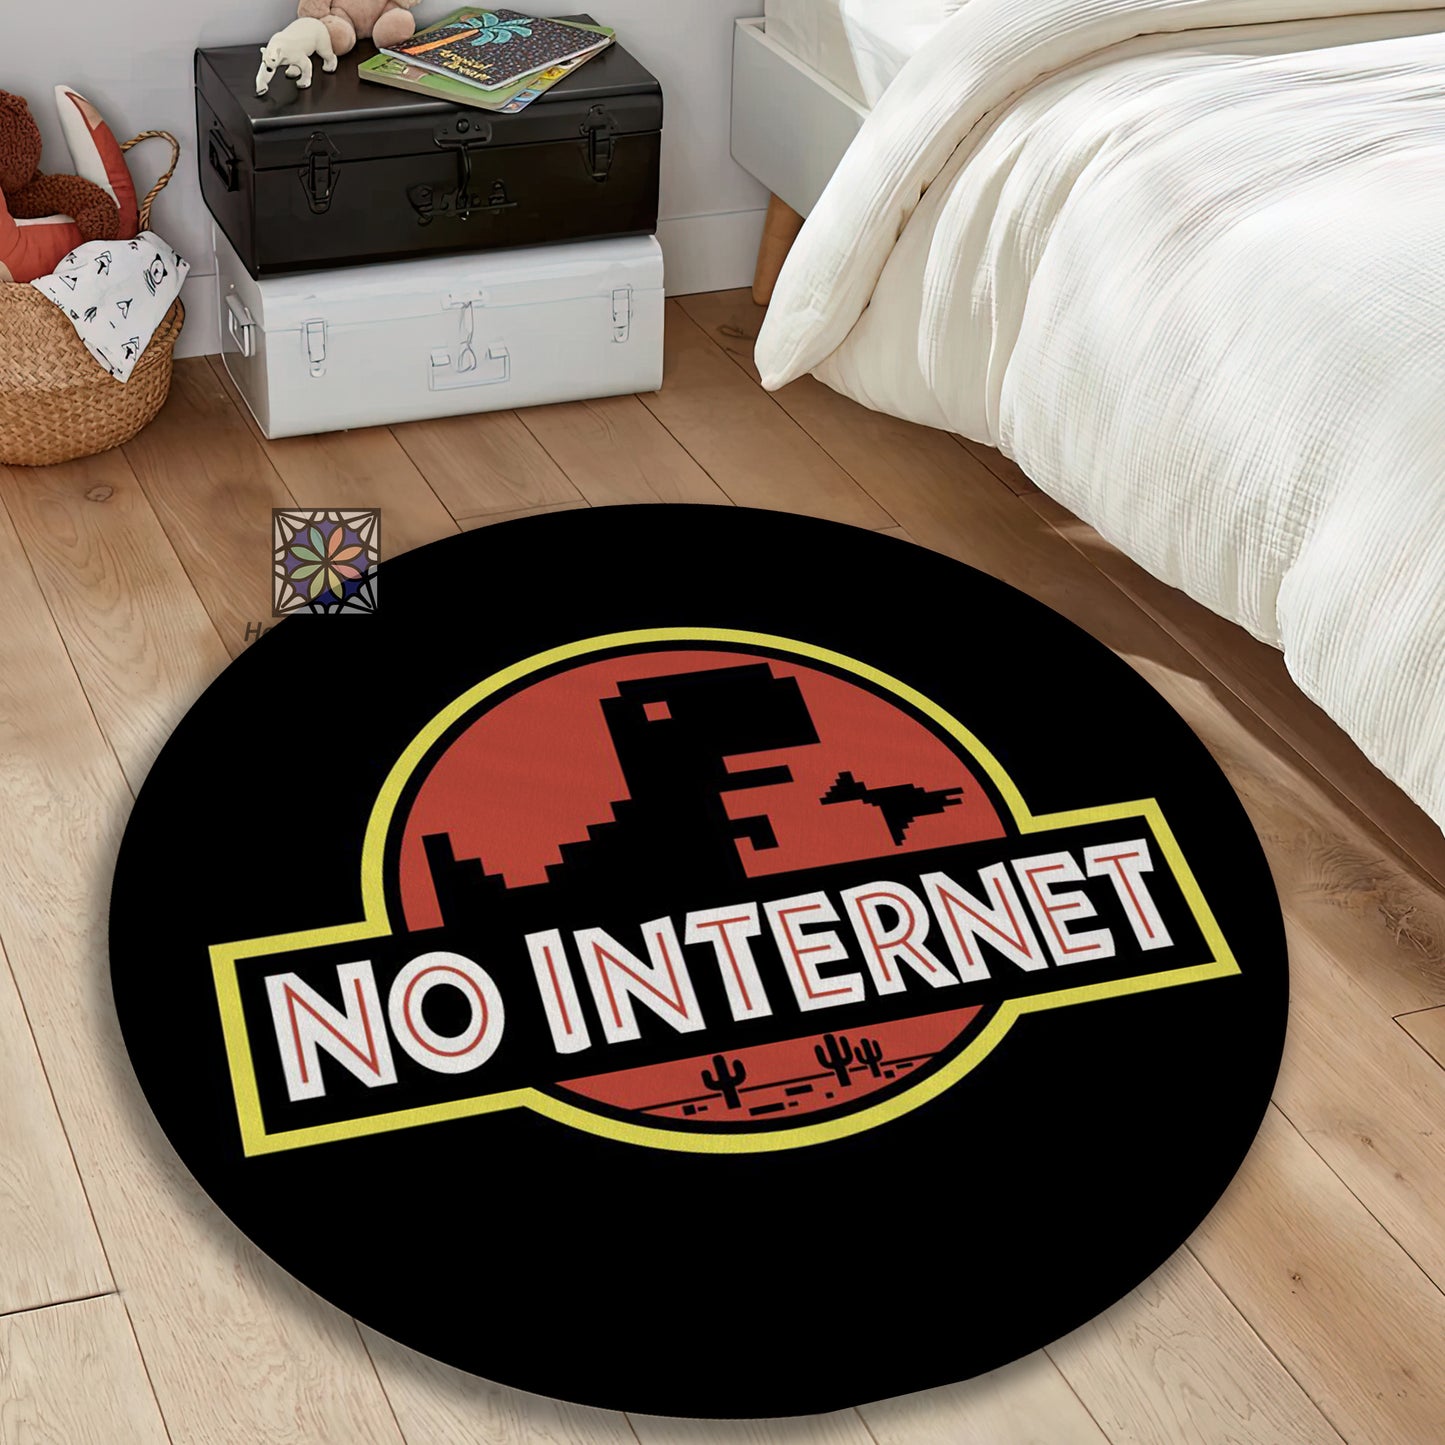 Funny Game Rug, No Internet Text Carpet, Black Gaming Chair Mat, Gamer Room Decor, Gift for Gamer